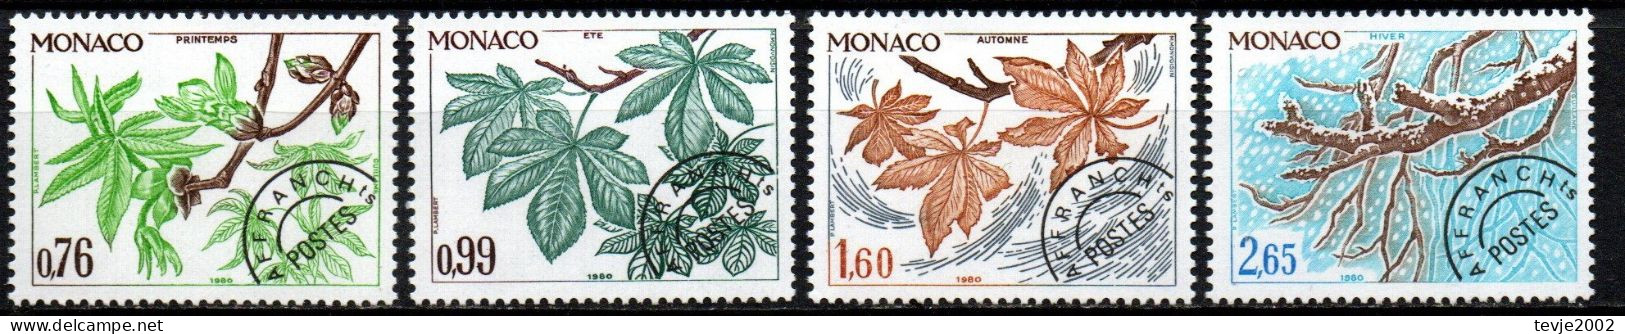 Monaco 1980 - Mi.Nr. 1410 - 1413 - Postfrisch MNH - Bäume Trees Kastanie - Arbres